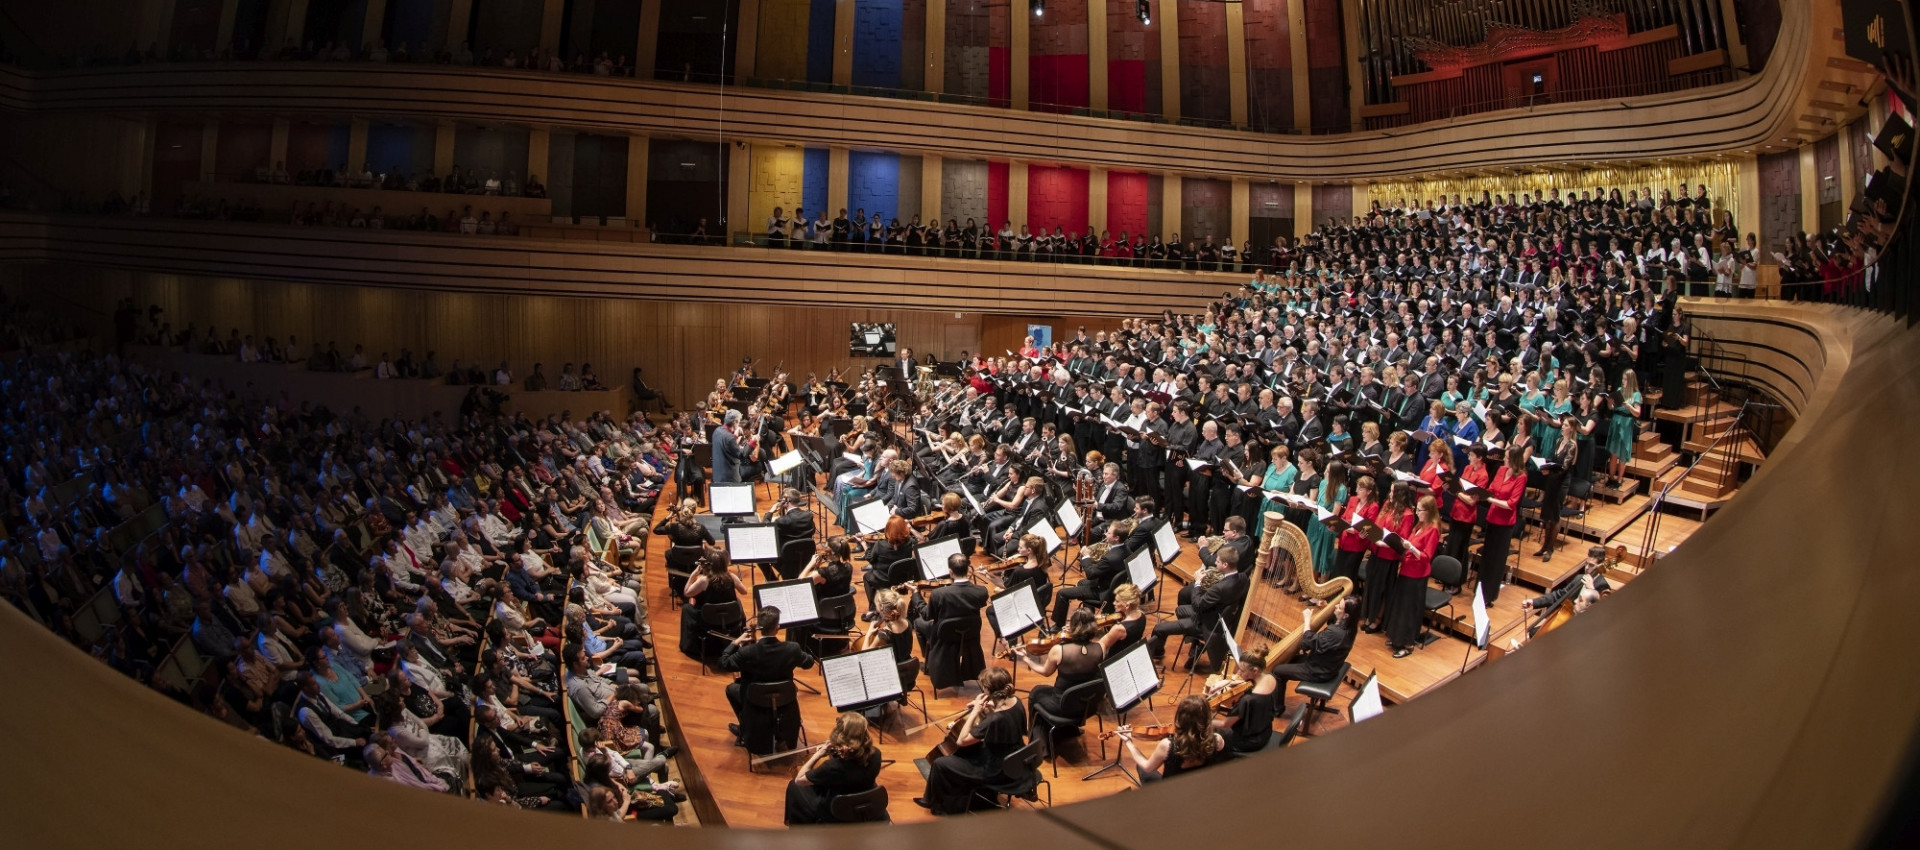 Fourth Budapest International Choral Celebration - Opening concert, National Concert Hall Budapest, 1 July